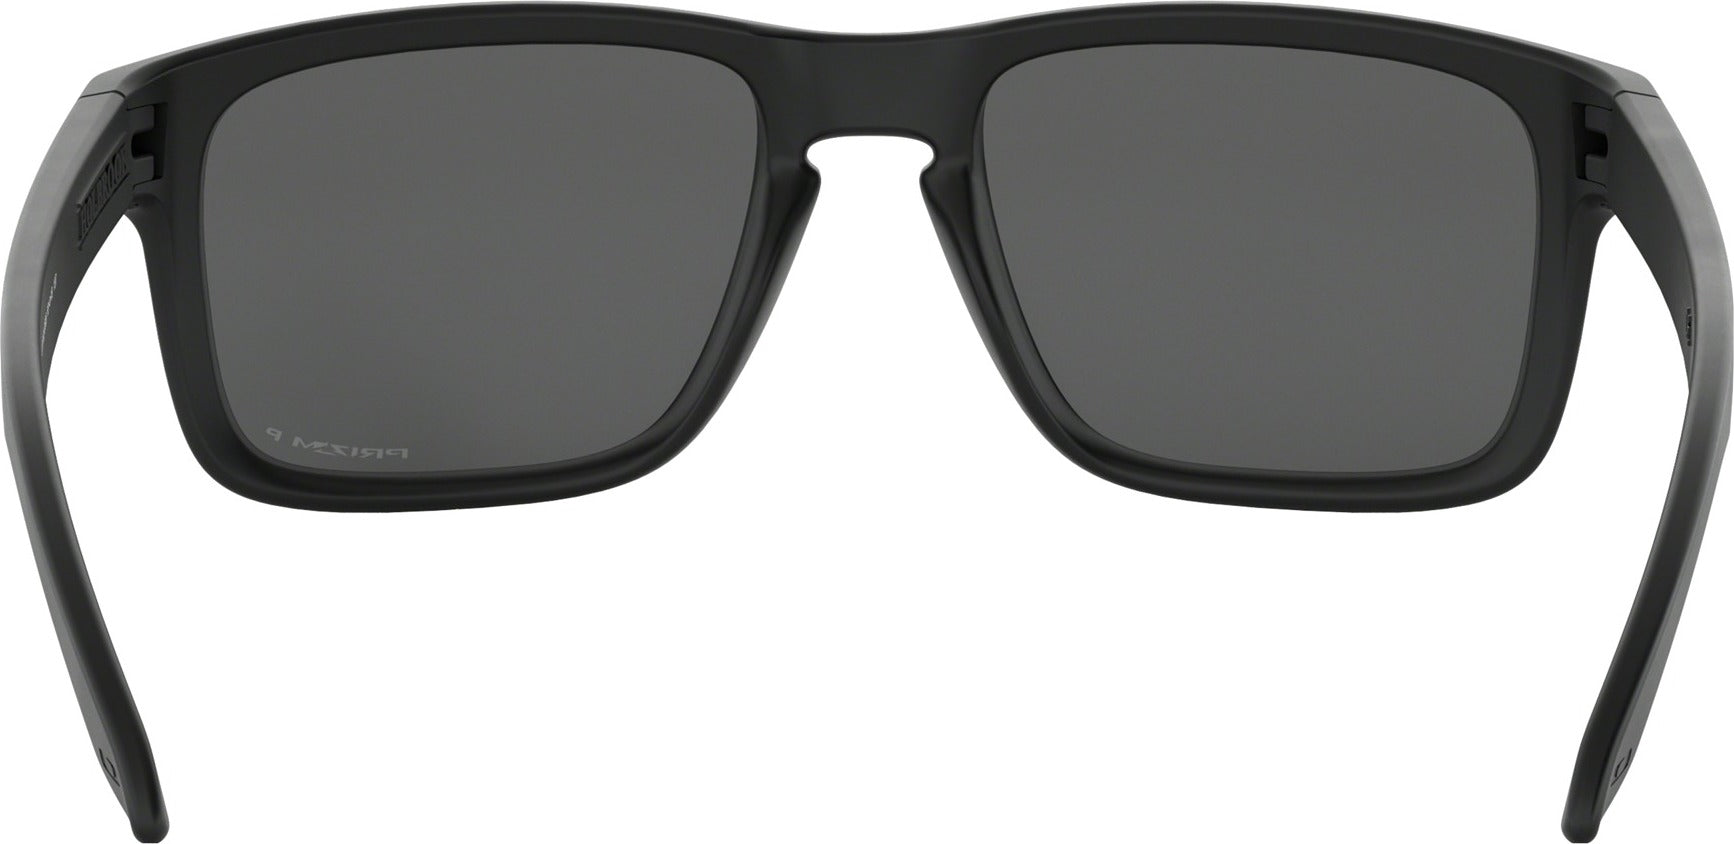 Oakley Holbrook Sunglasses - Matte Black - Prizm Black Polarized